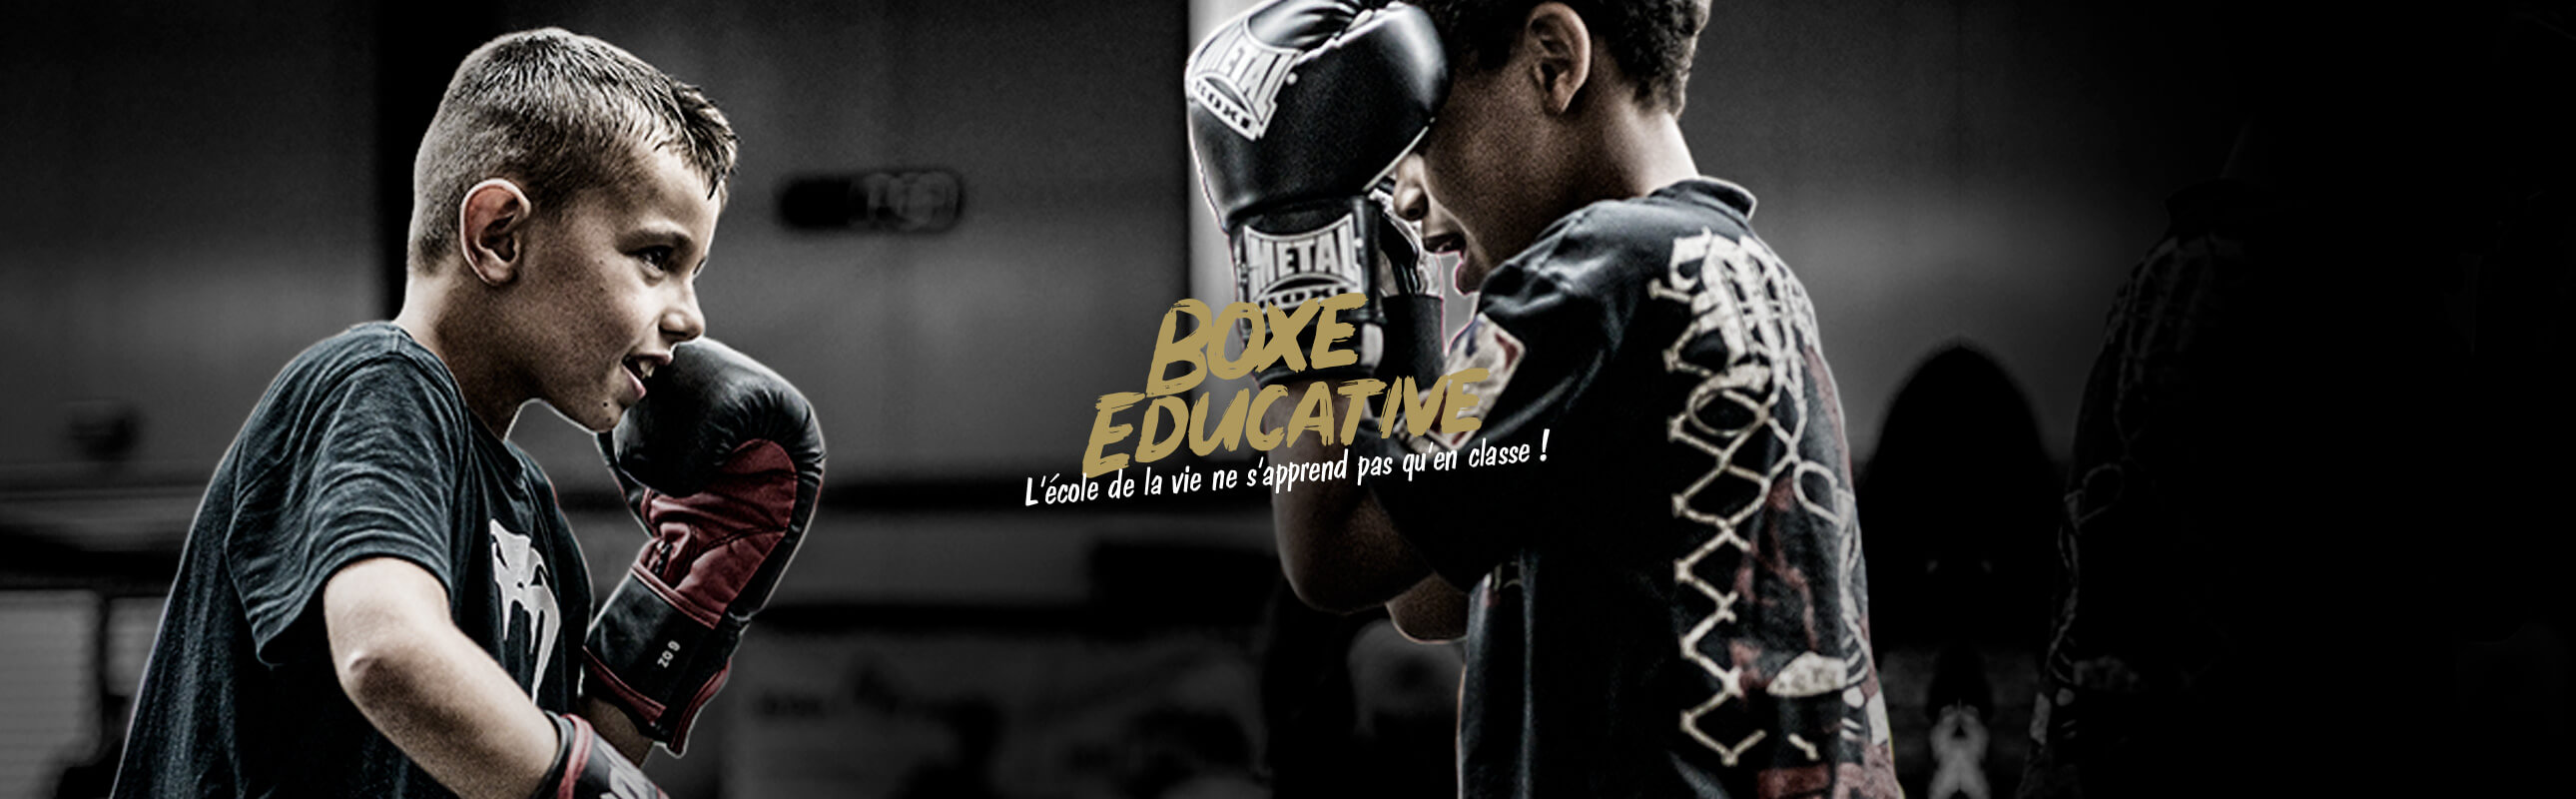 Boxe éducative